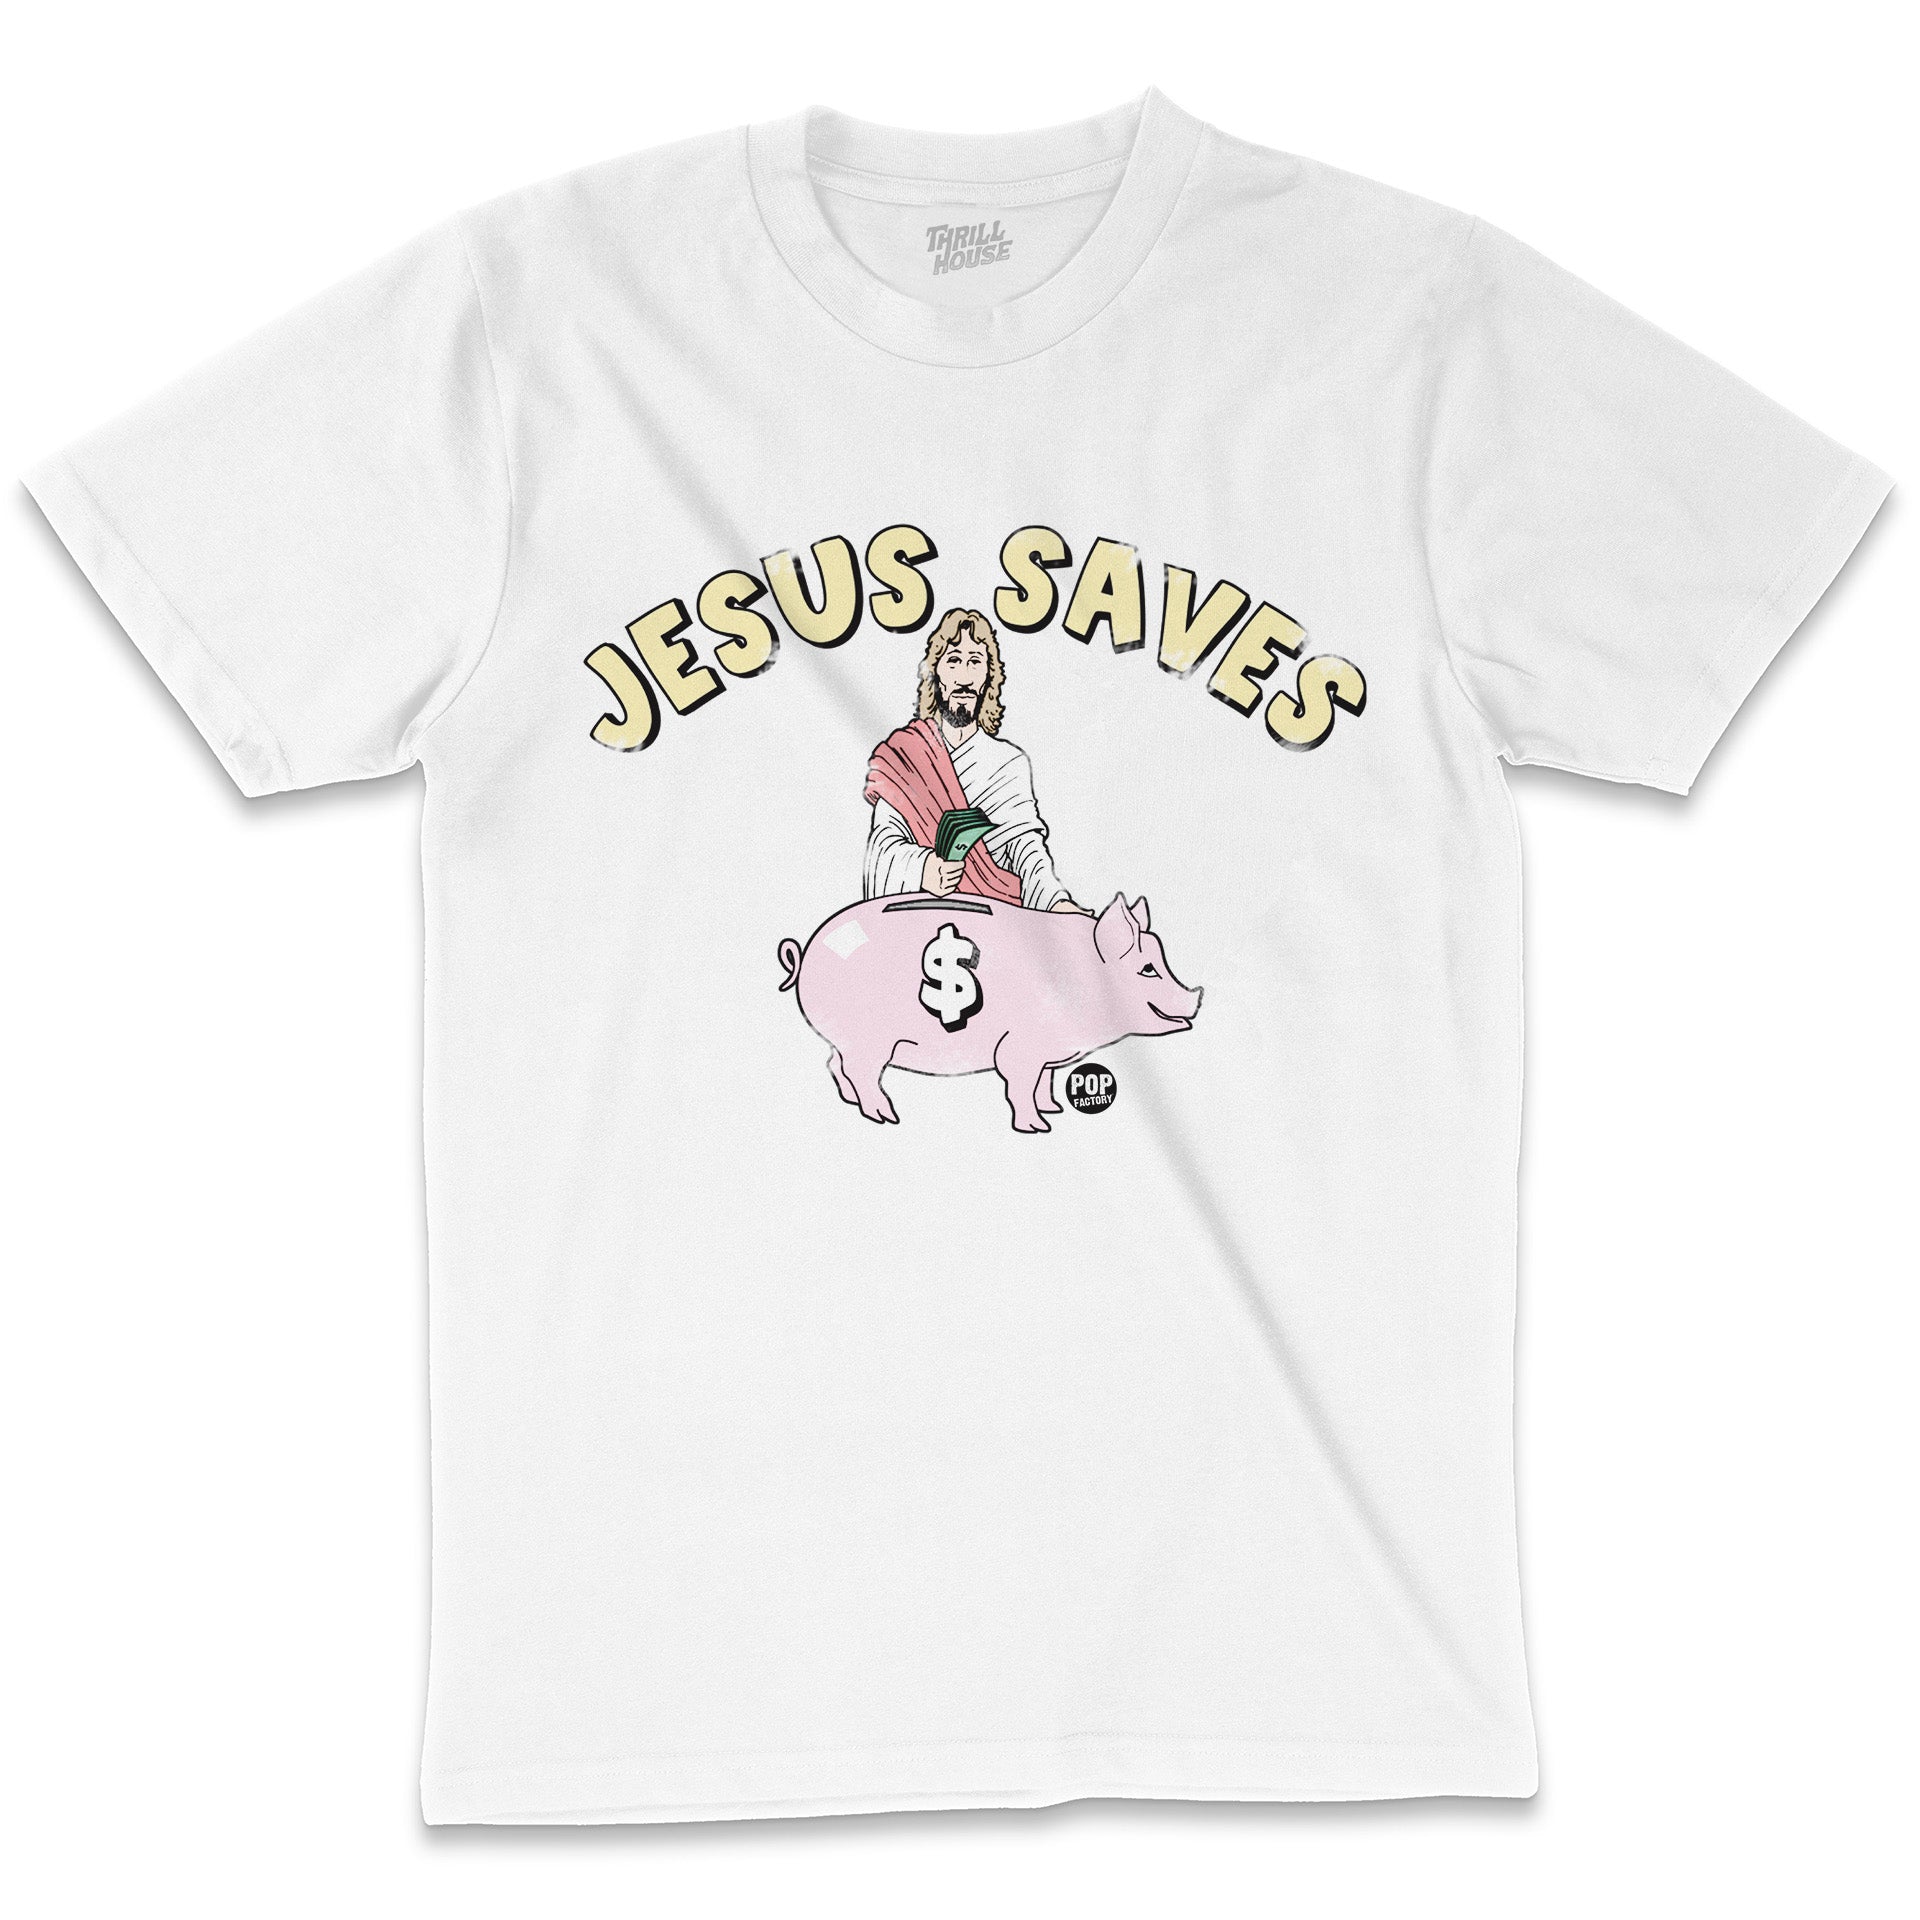 Jesus Saves Money Funny Slogan Saying Religion Christianity Parody Cotton T-Shirt